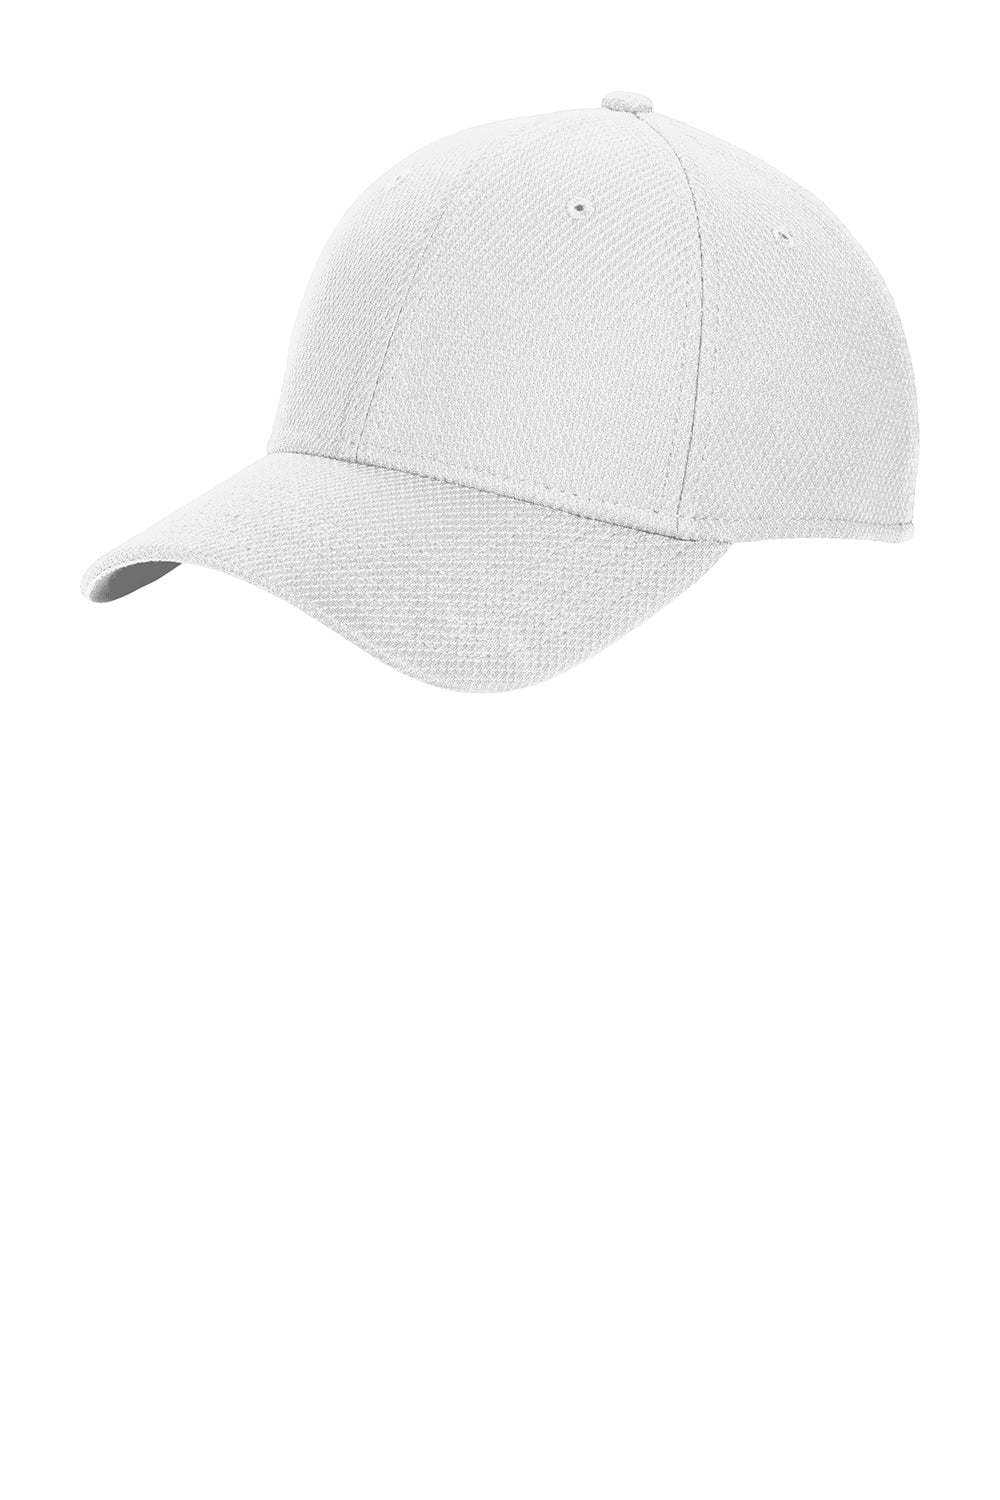 New Era NE1121 Mens Moisture Wicking Stretch Fit Hat White Front